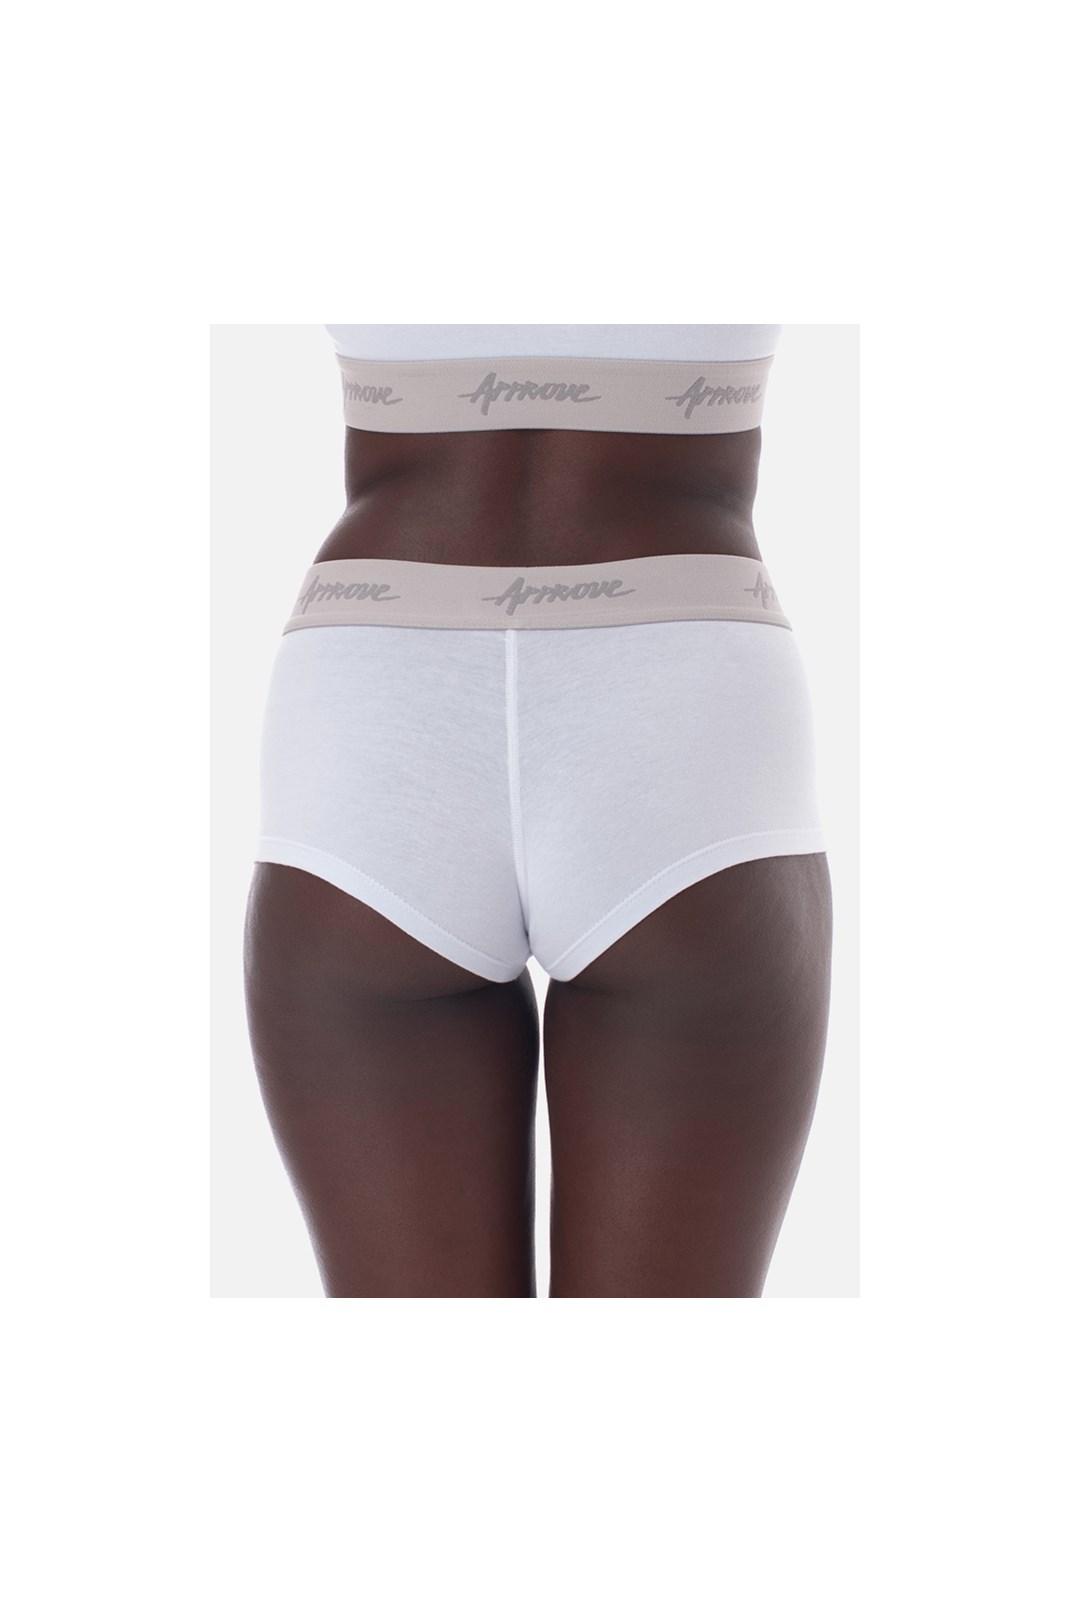 Shorts Underwear Approve Branco Com Cinza